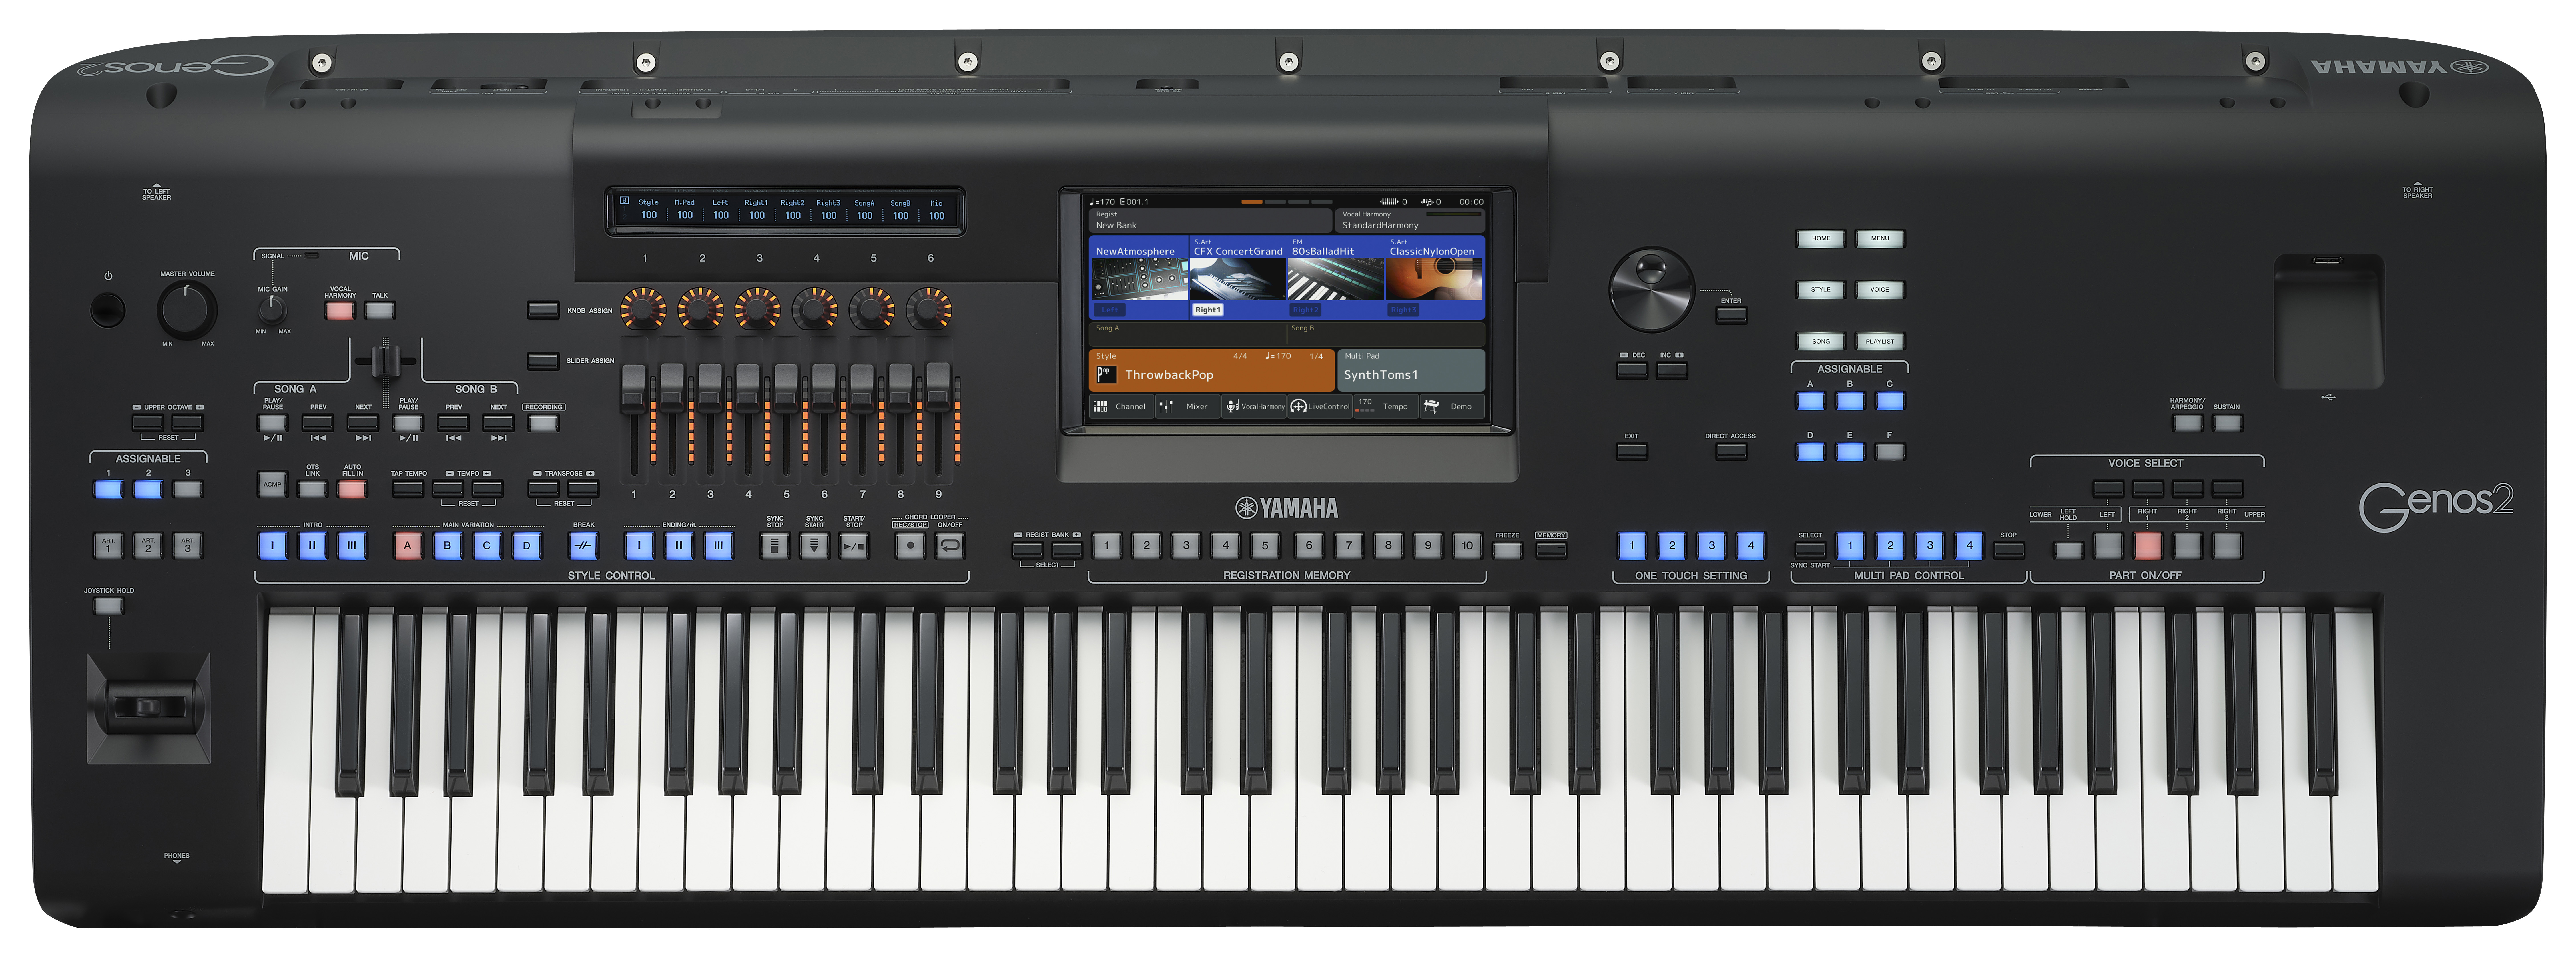 Se Yamaha Genos2 Keyboard hos Allround Musik